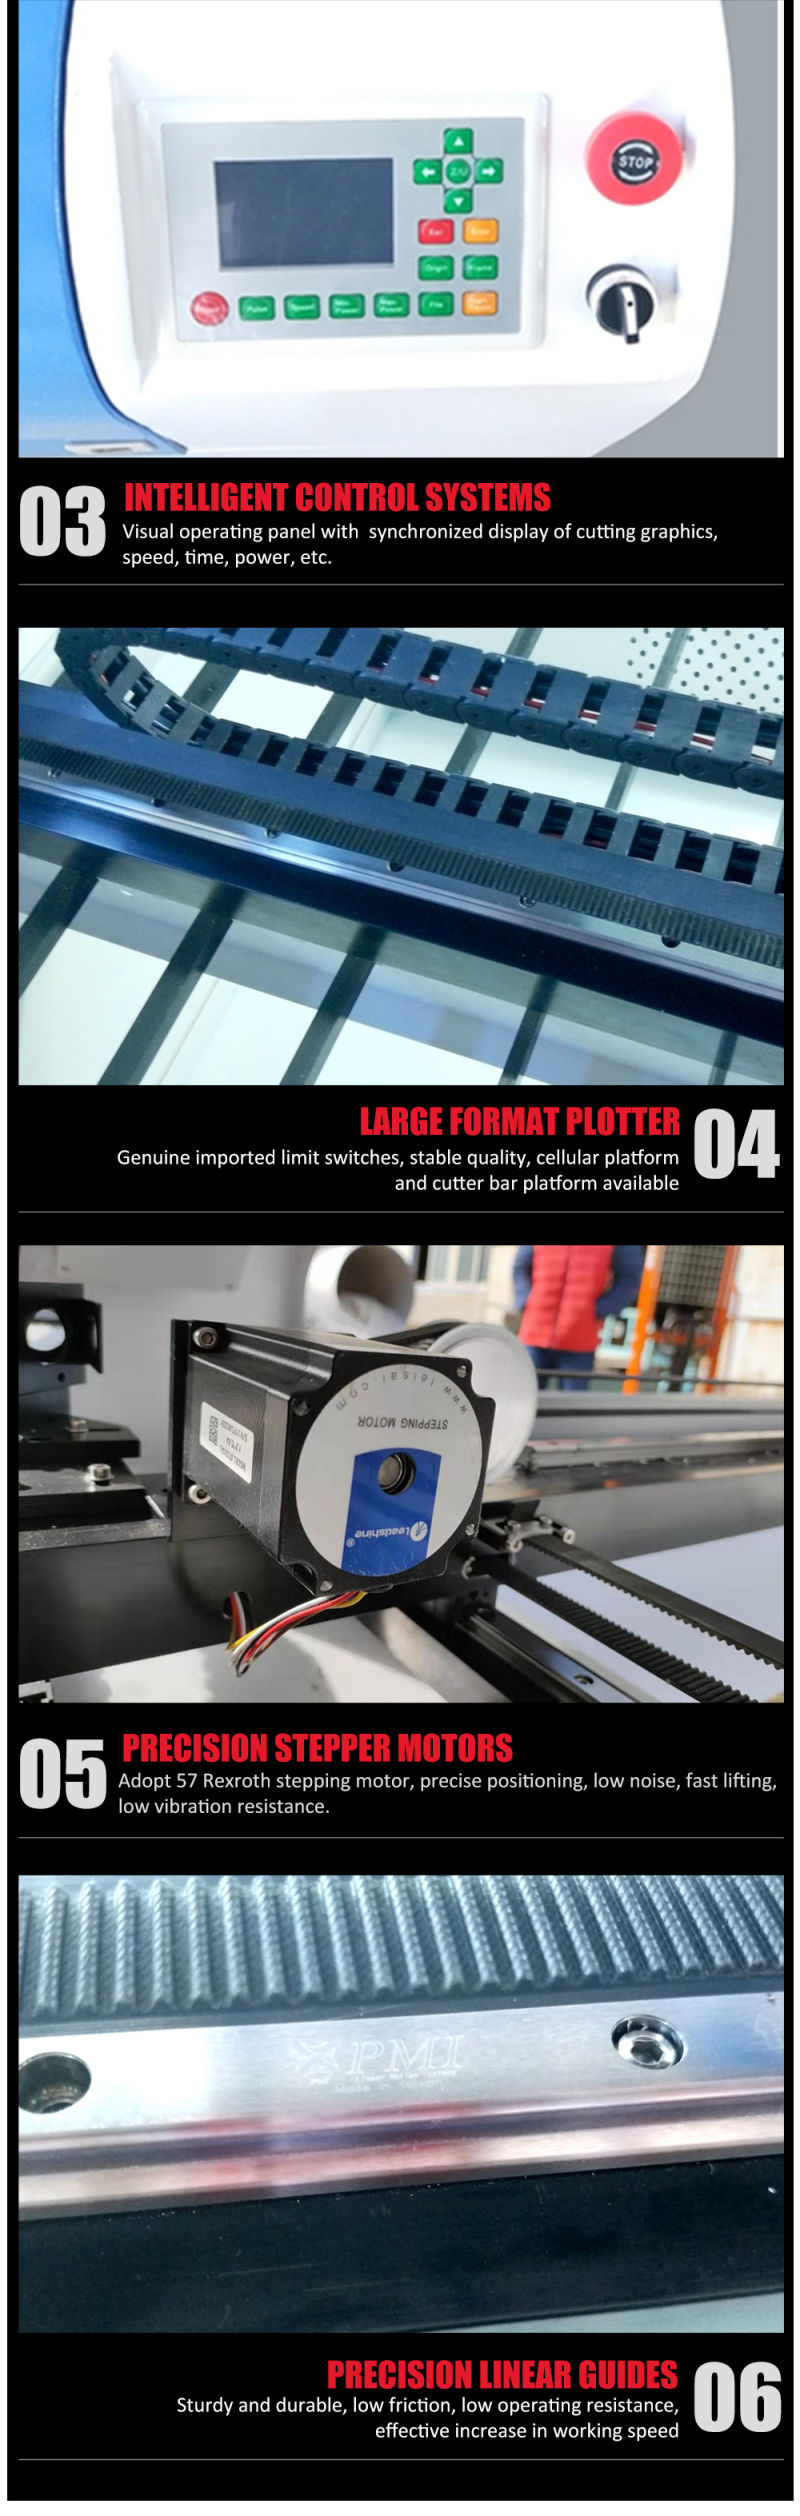 Jinan Laser Max CO2 Laser Engraver 60W 80W 100W 130W Laser Cutting Cutter Machine Price